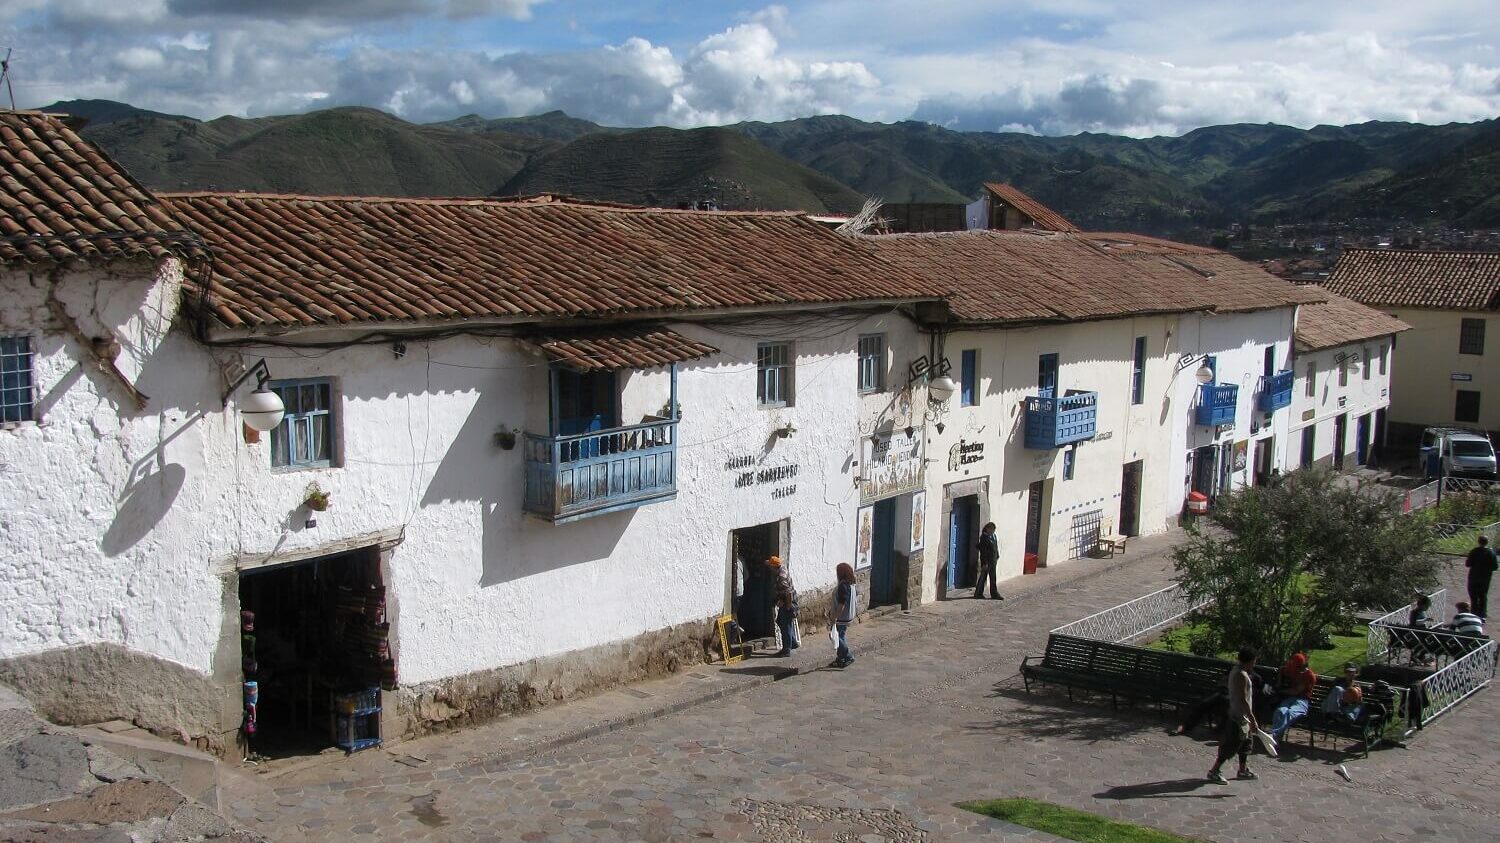 Square of San Blas neighbourhood, Cusco. Visit Cusco alternatively with RESPONSible Travel Peru!